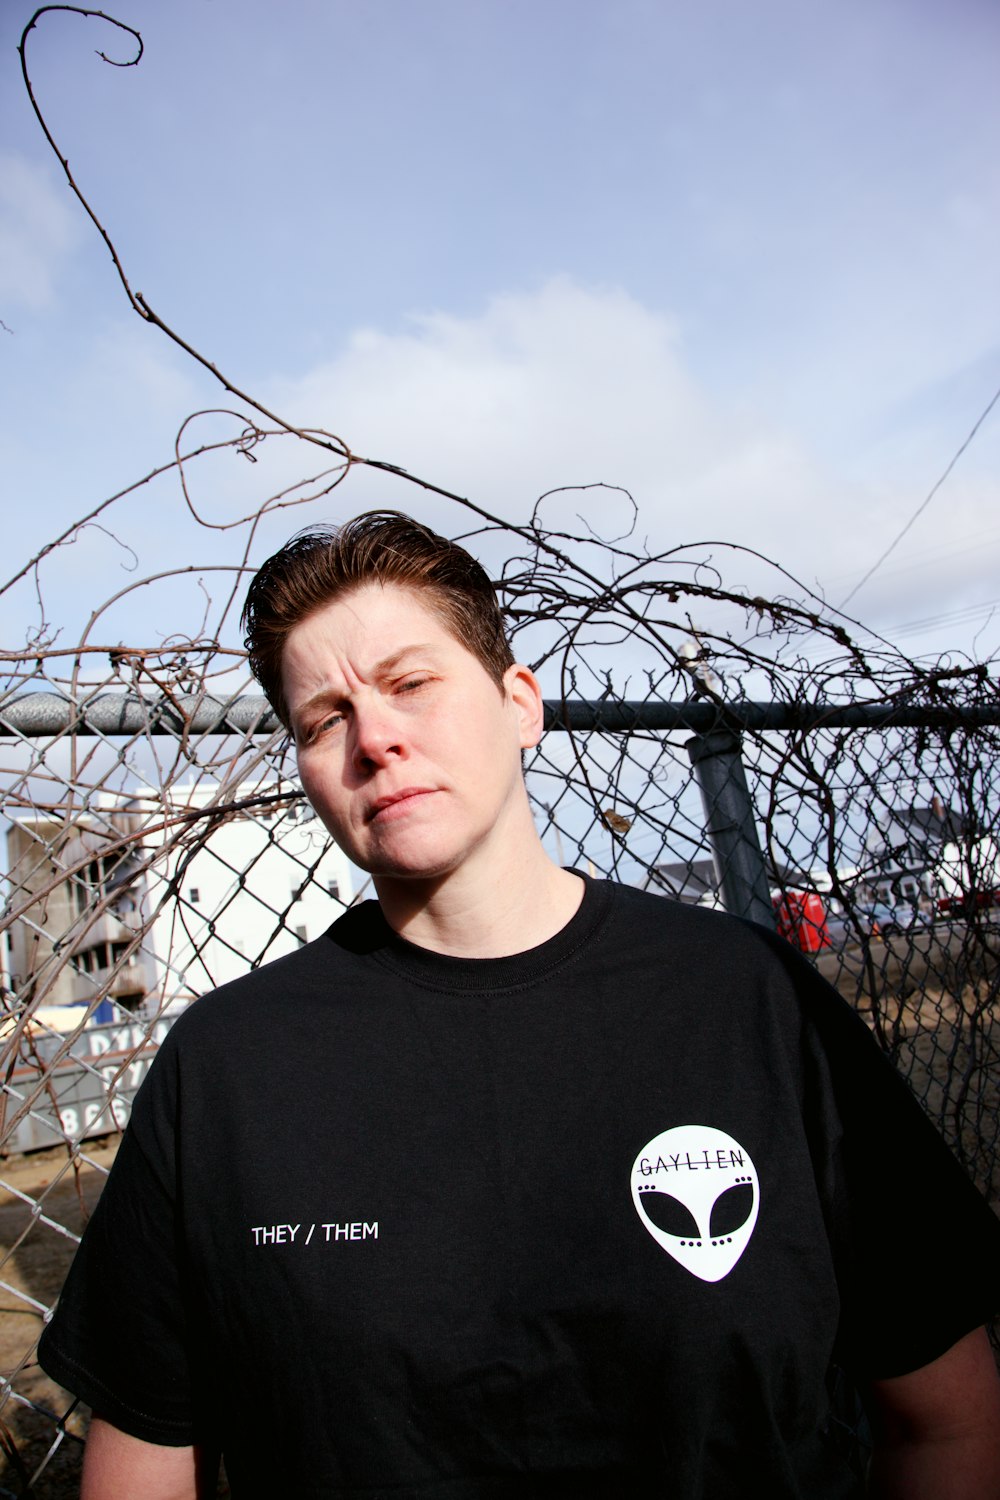 man in black crew neck shirt standing near gray metal fence during daytime